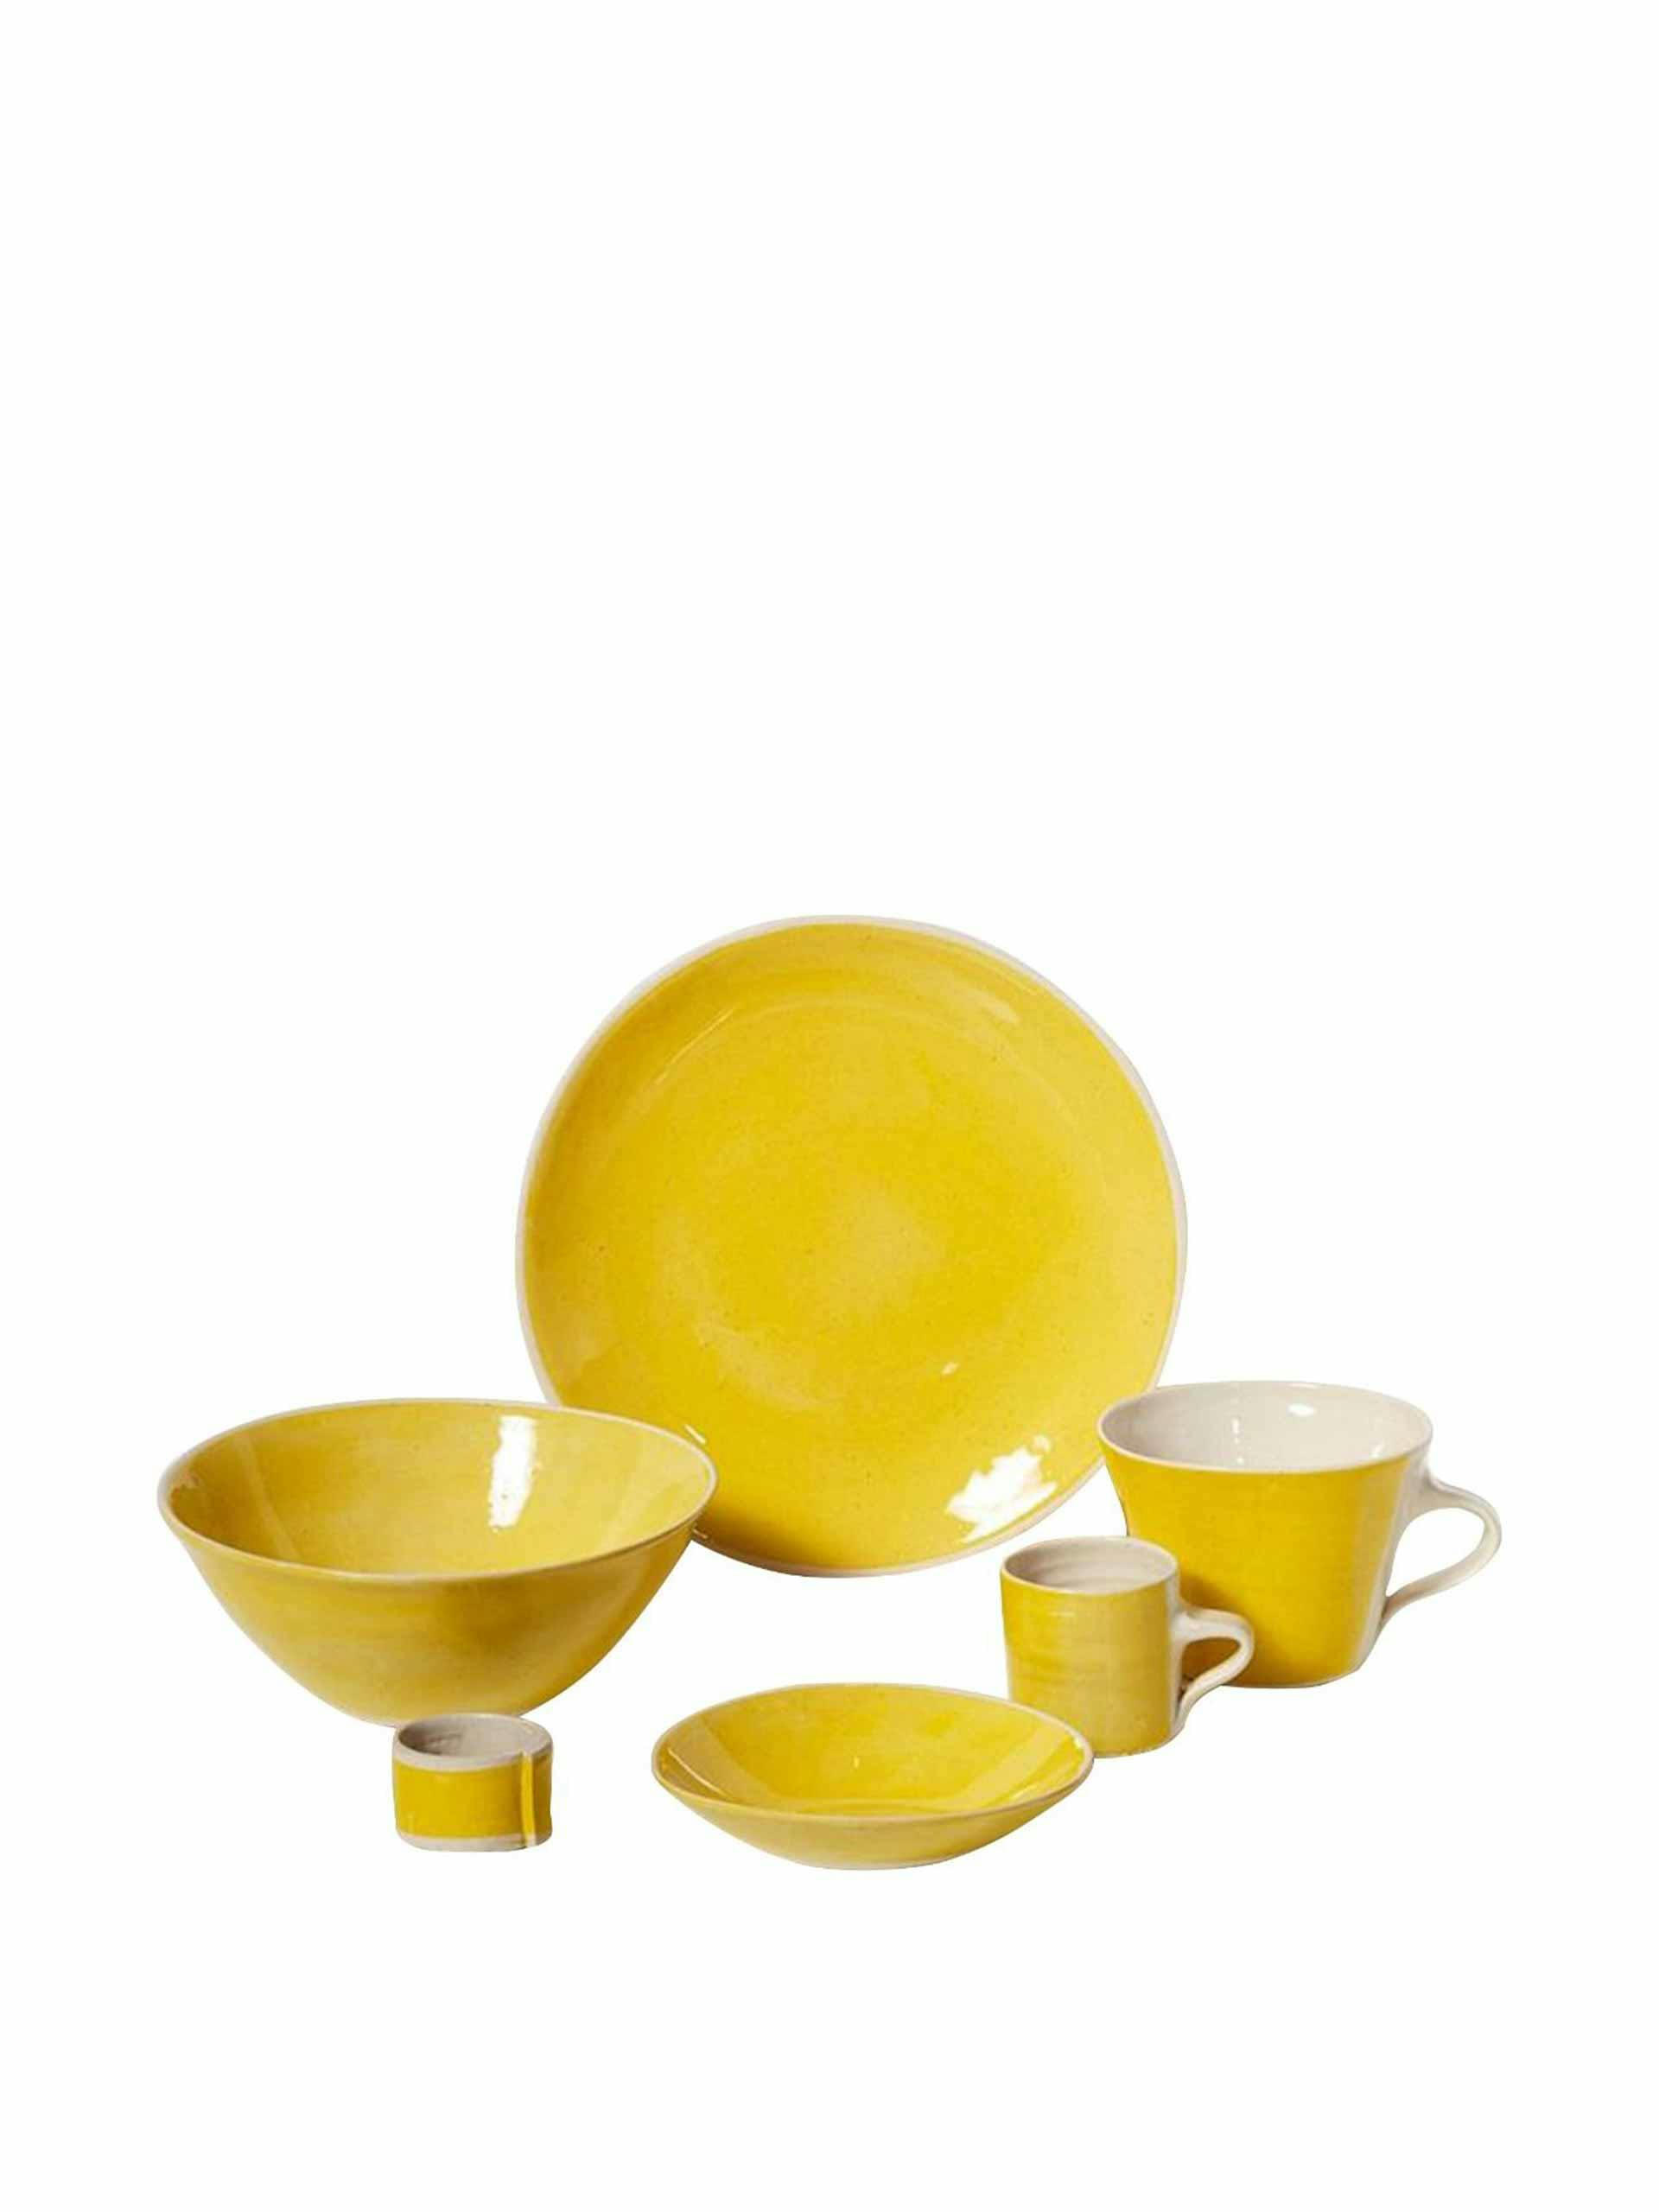 Yellow glazed tableware